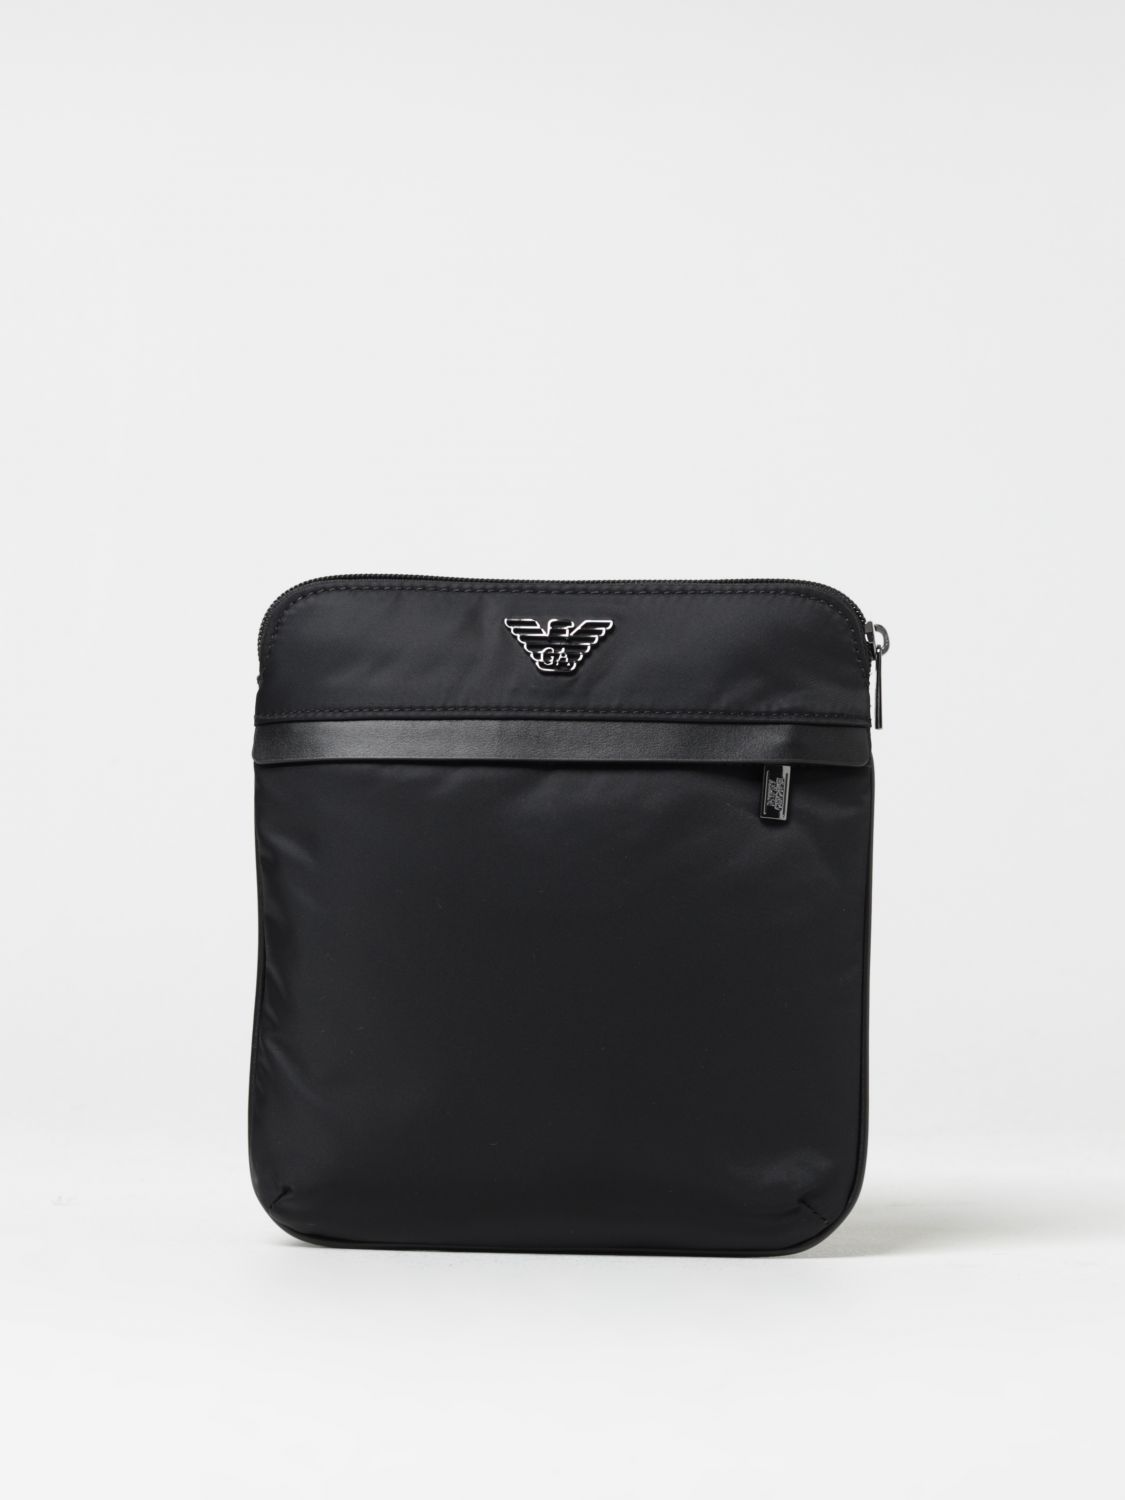 Emporio Armani Crossbody Bag in Black for Men